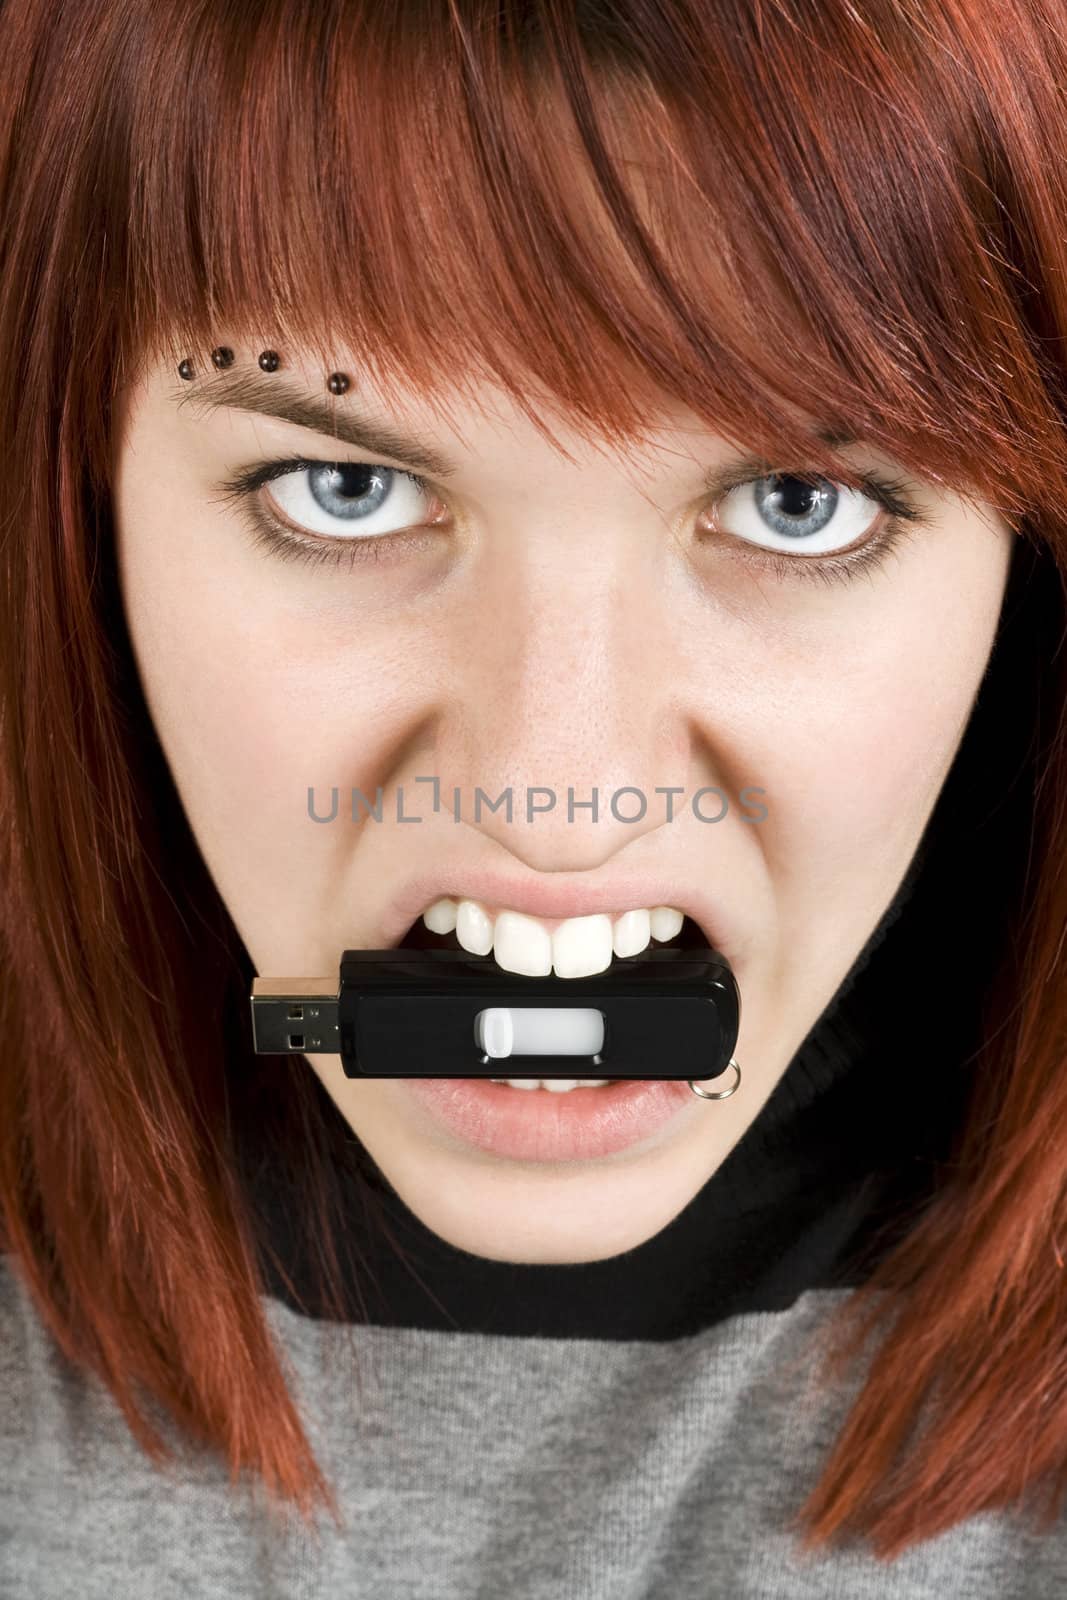 Aggresive girl biting memory stick by domencolja